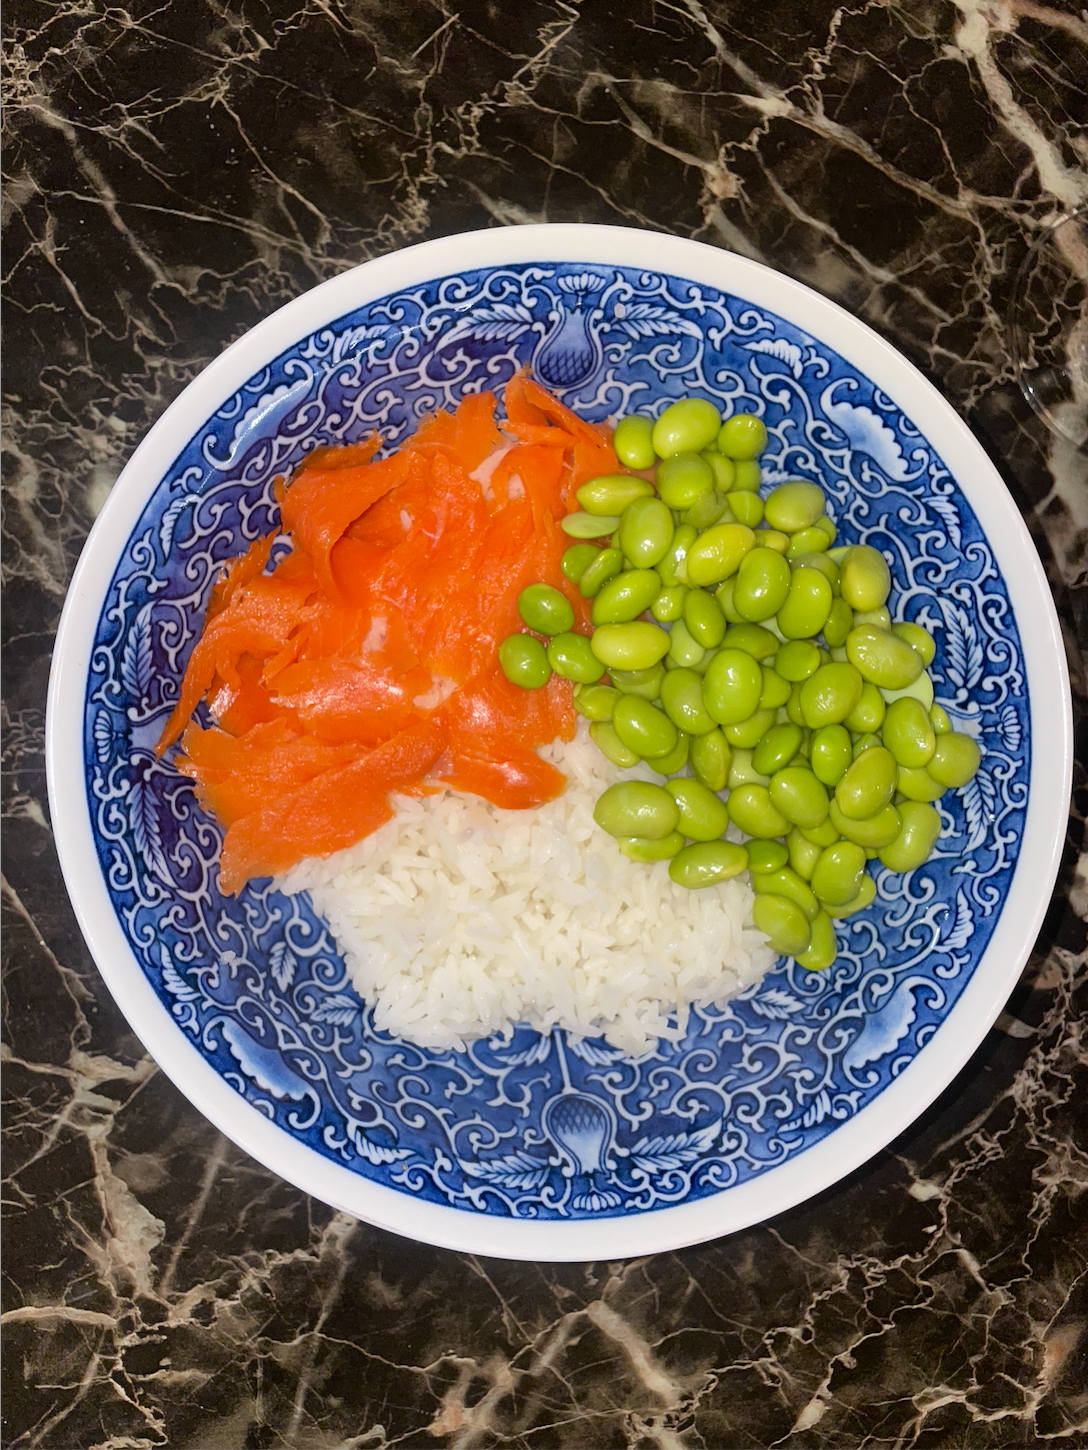 A bowl containing rice, smoked salmon, and edamame